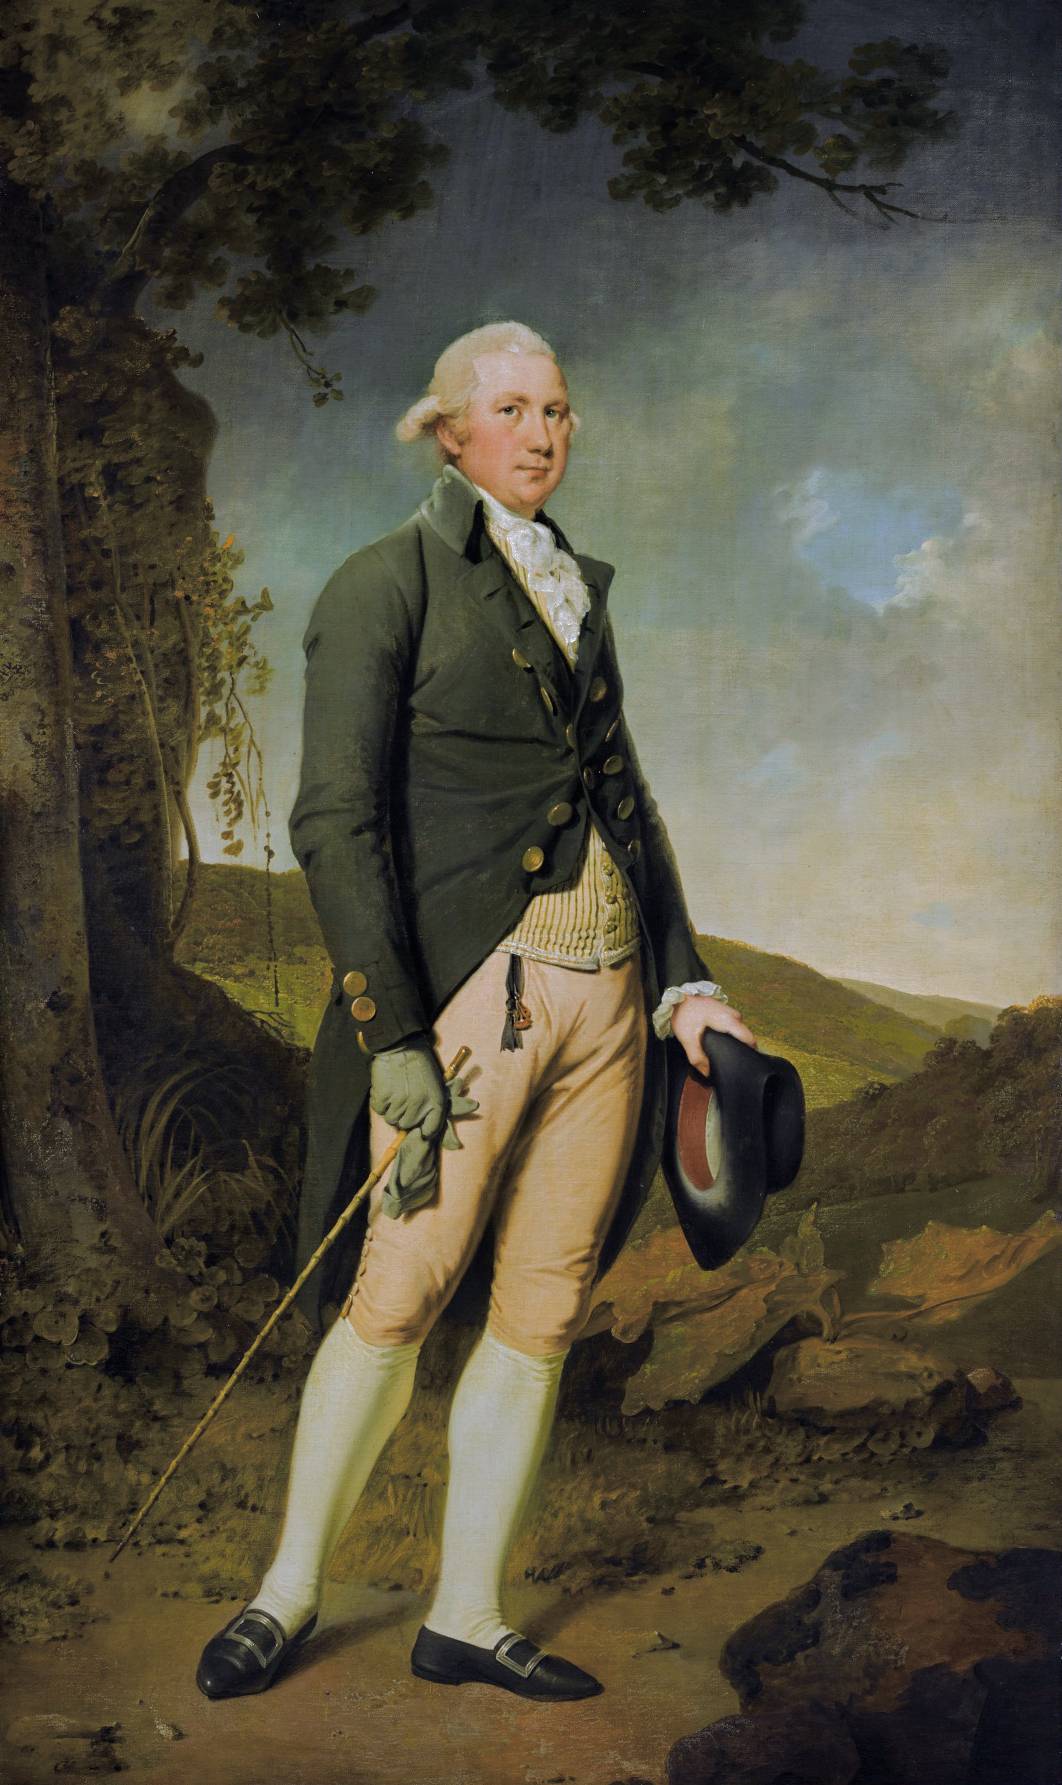 Joseph Wright of Derby (1780)